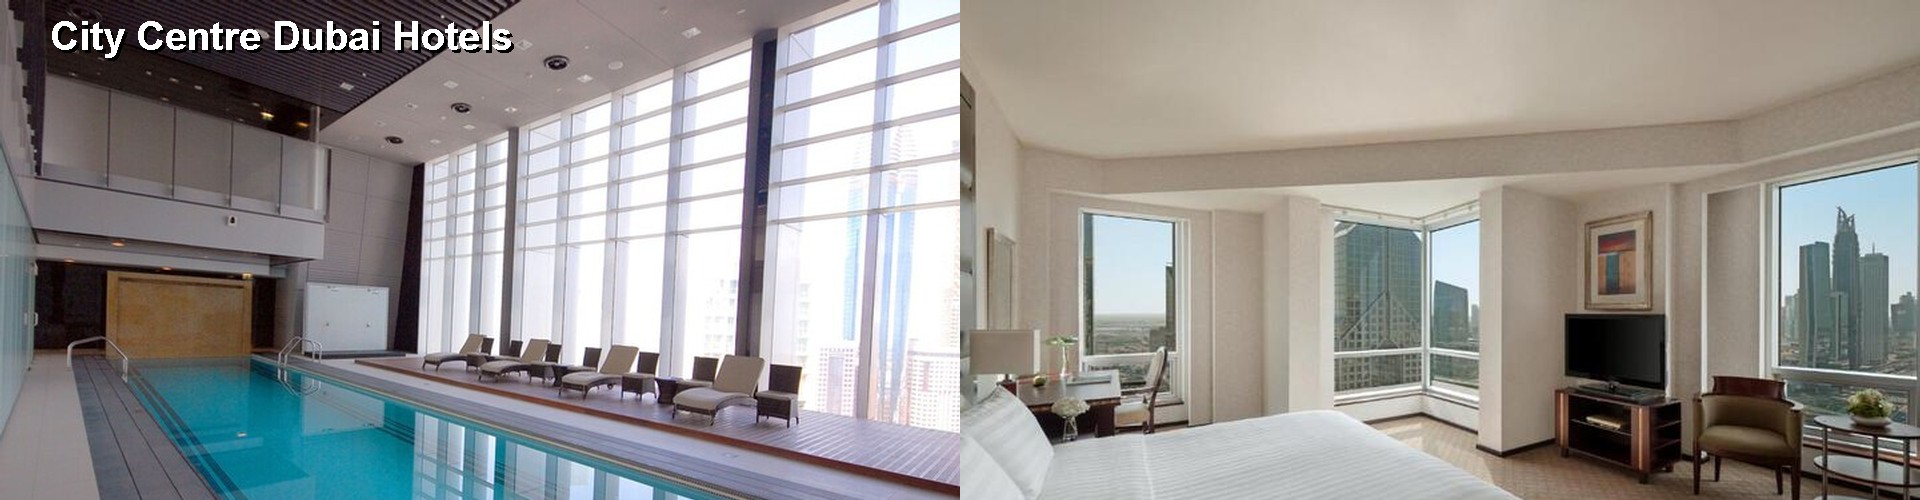 5 Best Hotels near City Centre Dubai